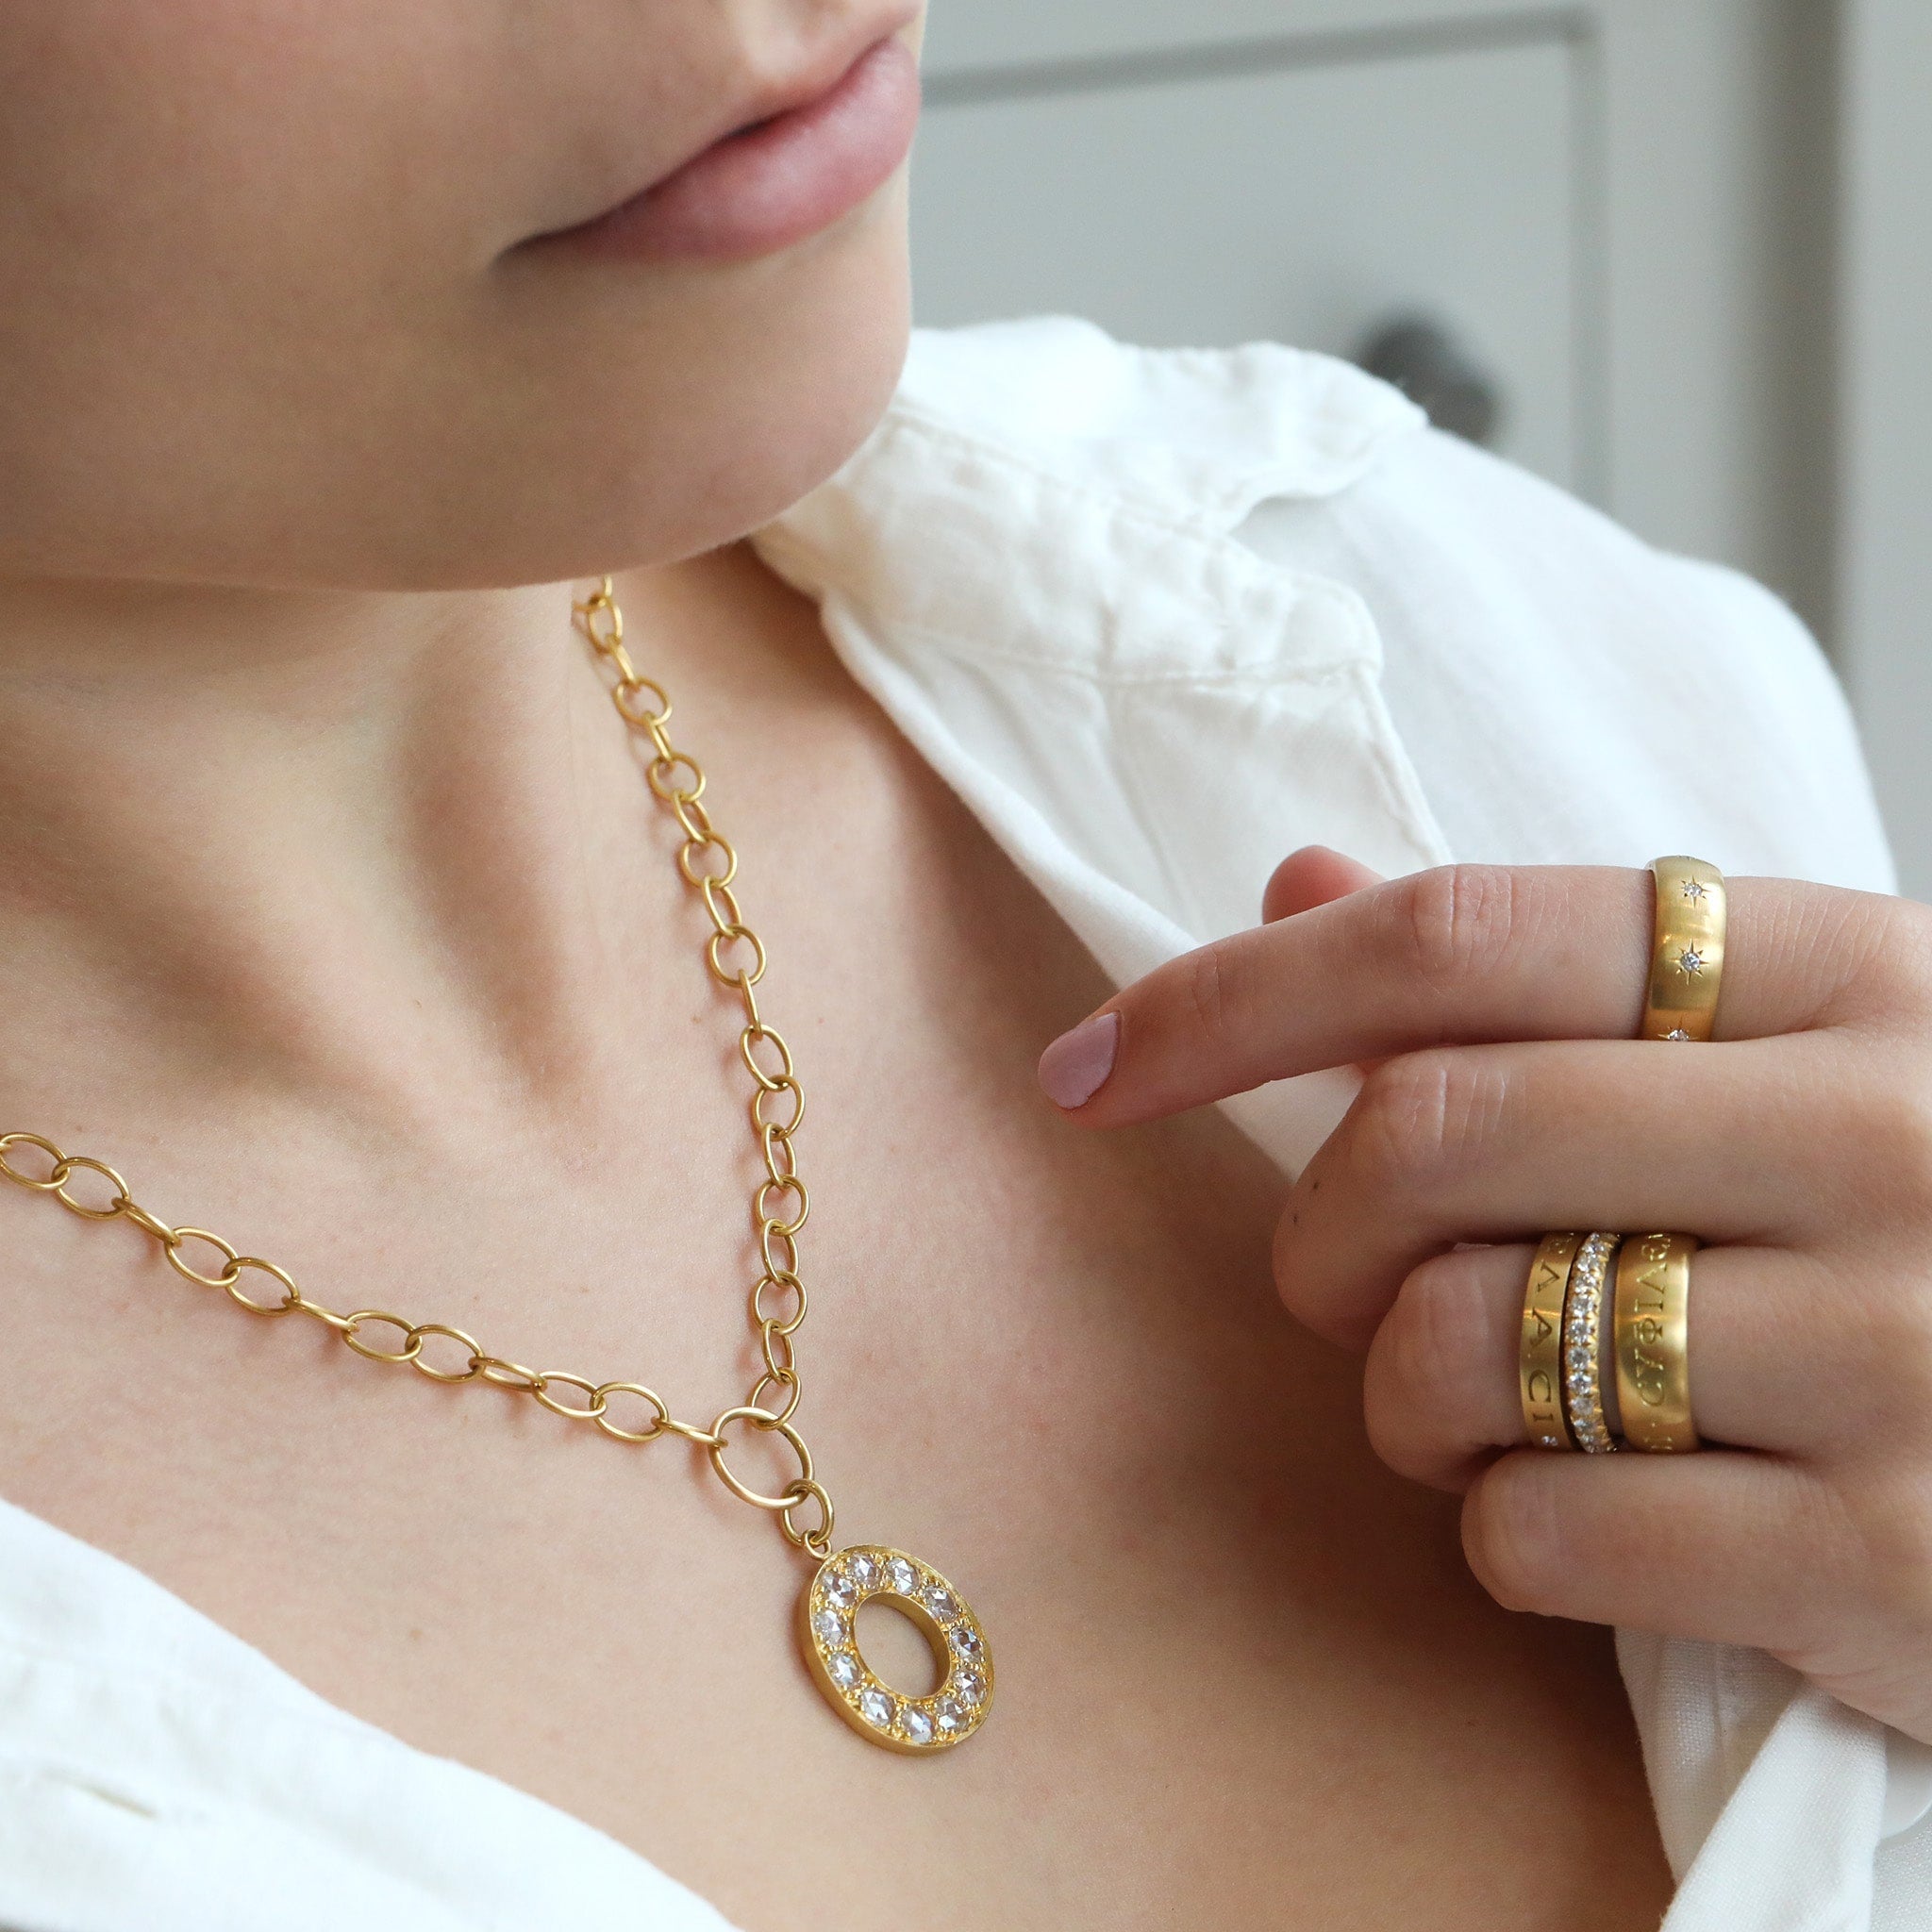 Caroline Ellen 20K Gold Circular Rose-Cut Diamond Pendant On Large Link Handmade Chain